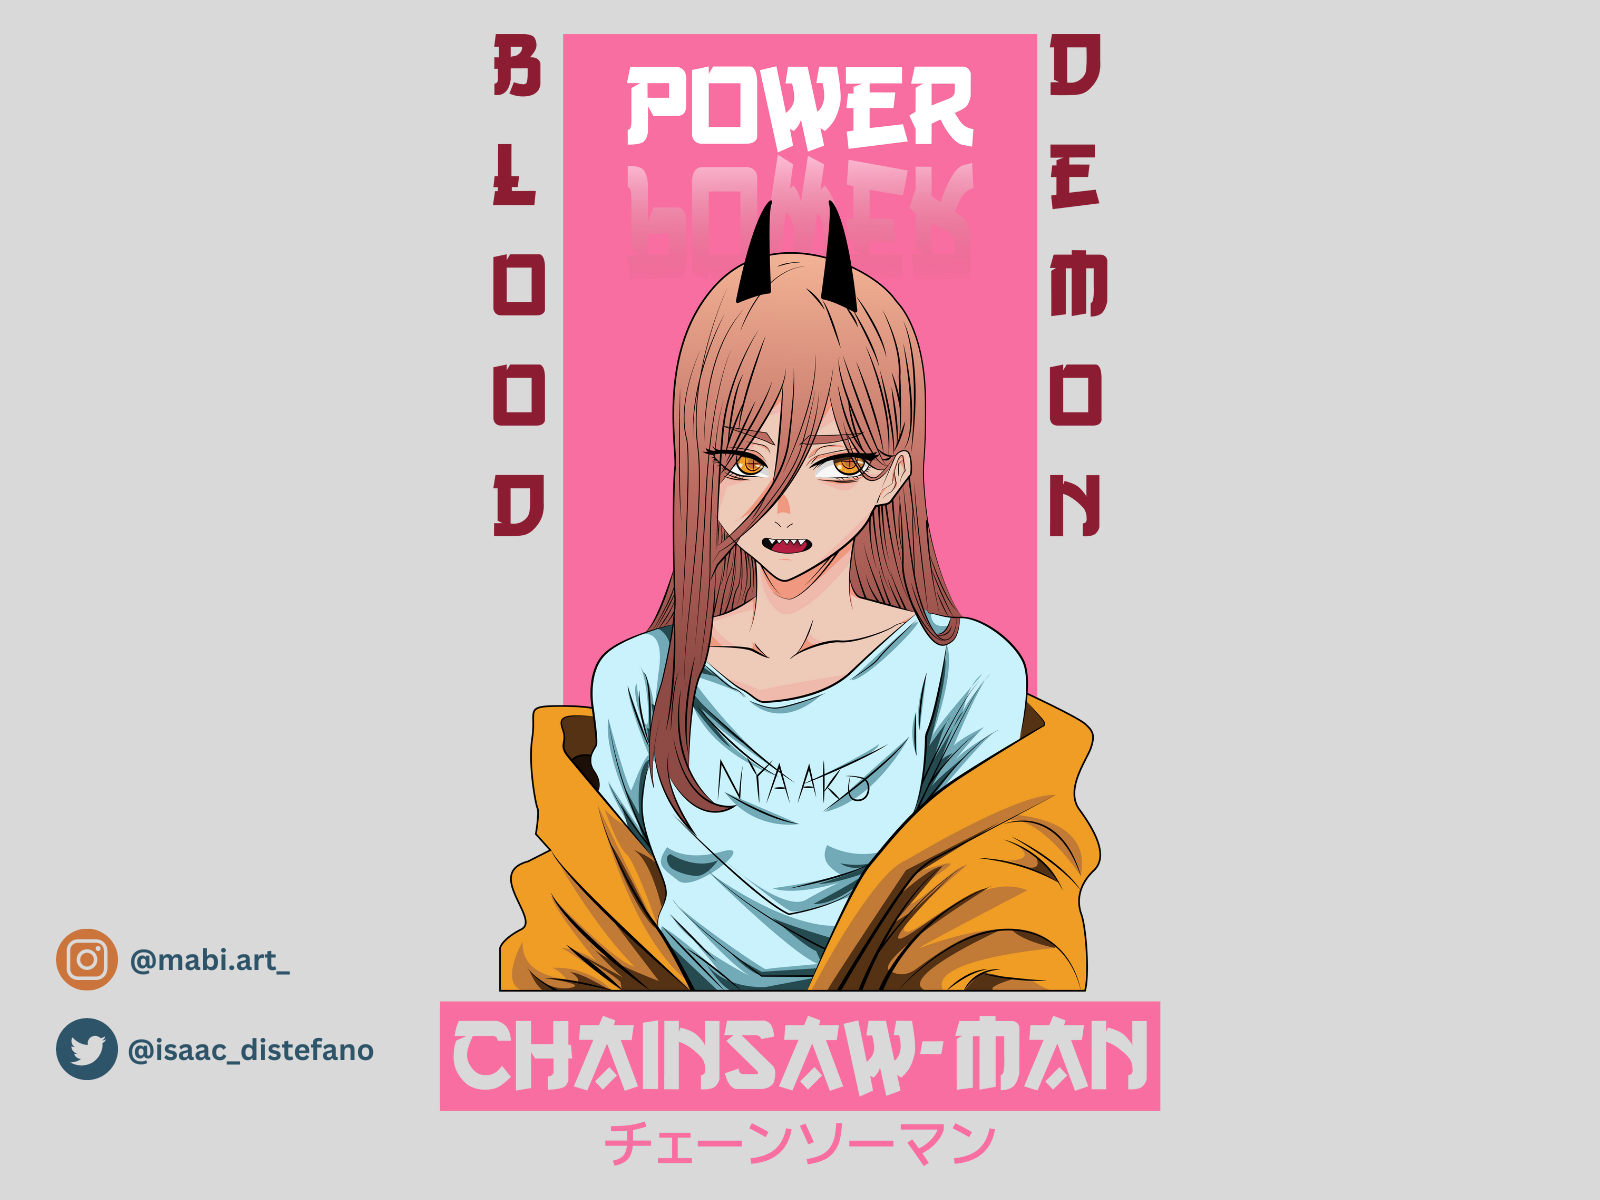 Csm Pochita Manga Gun Fiend Anime 2021 Denji And Power From Chainsaw Man  Graphic For Fans